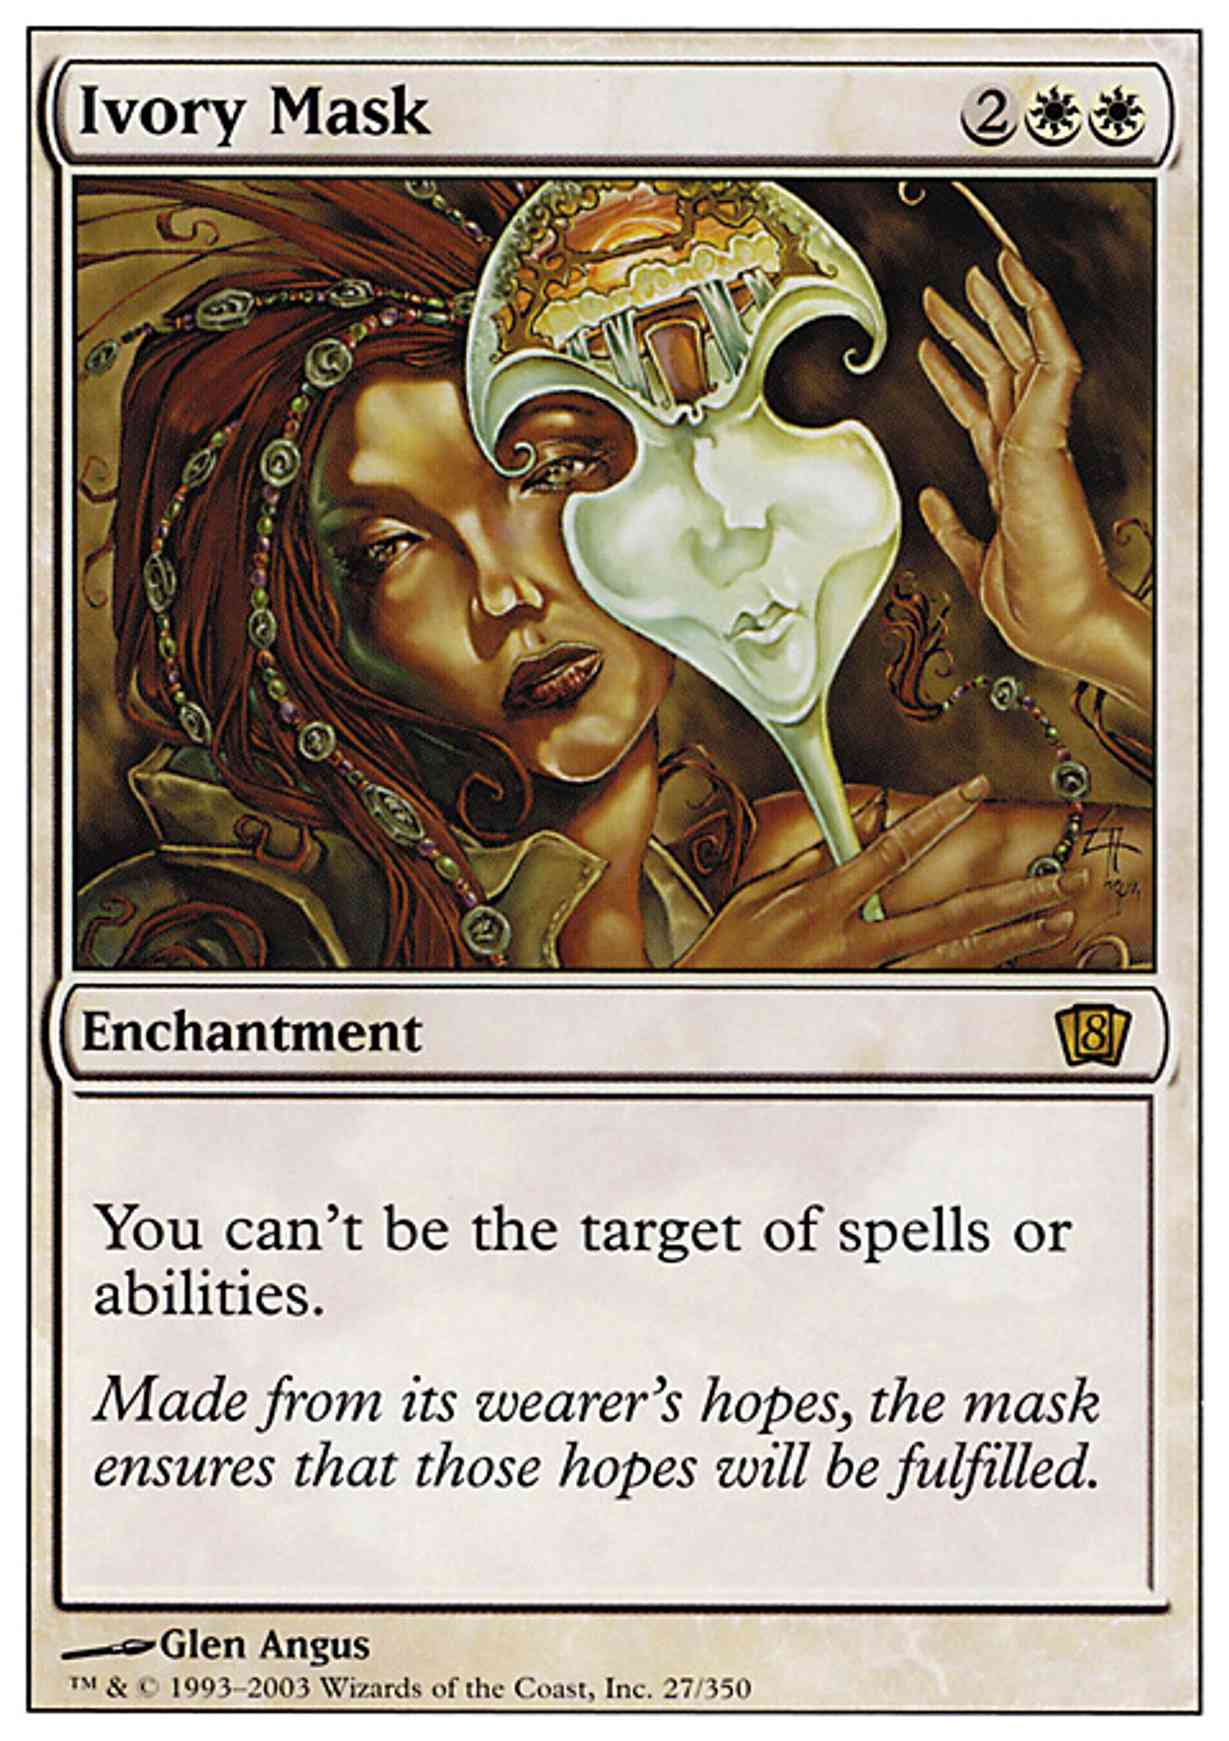 Ivory Mask magic card front